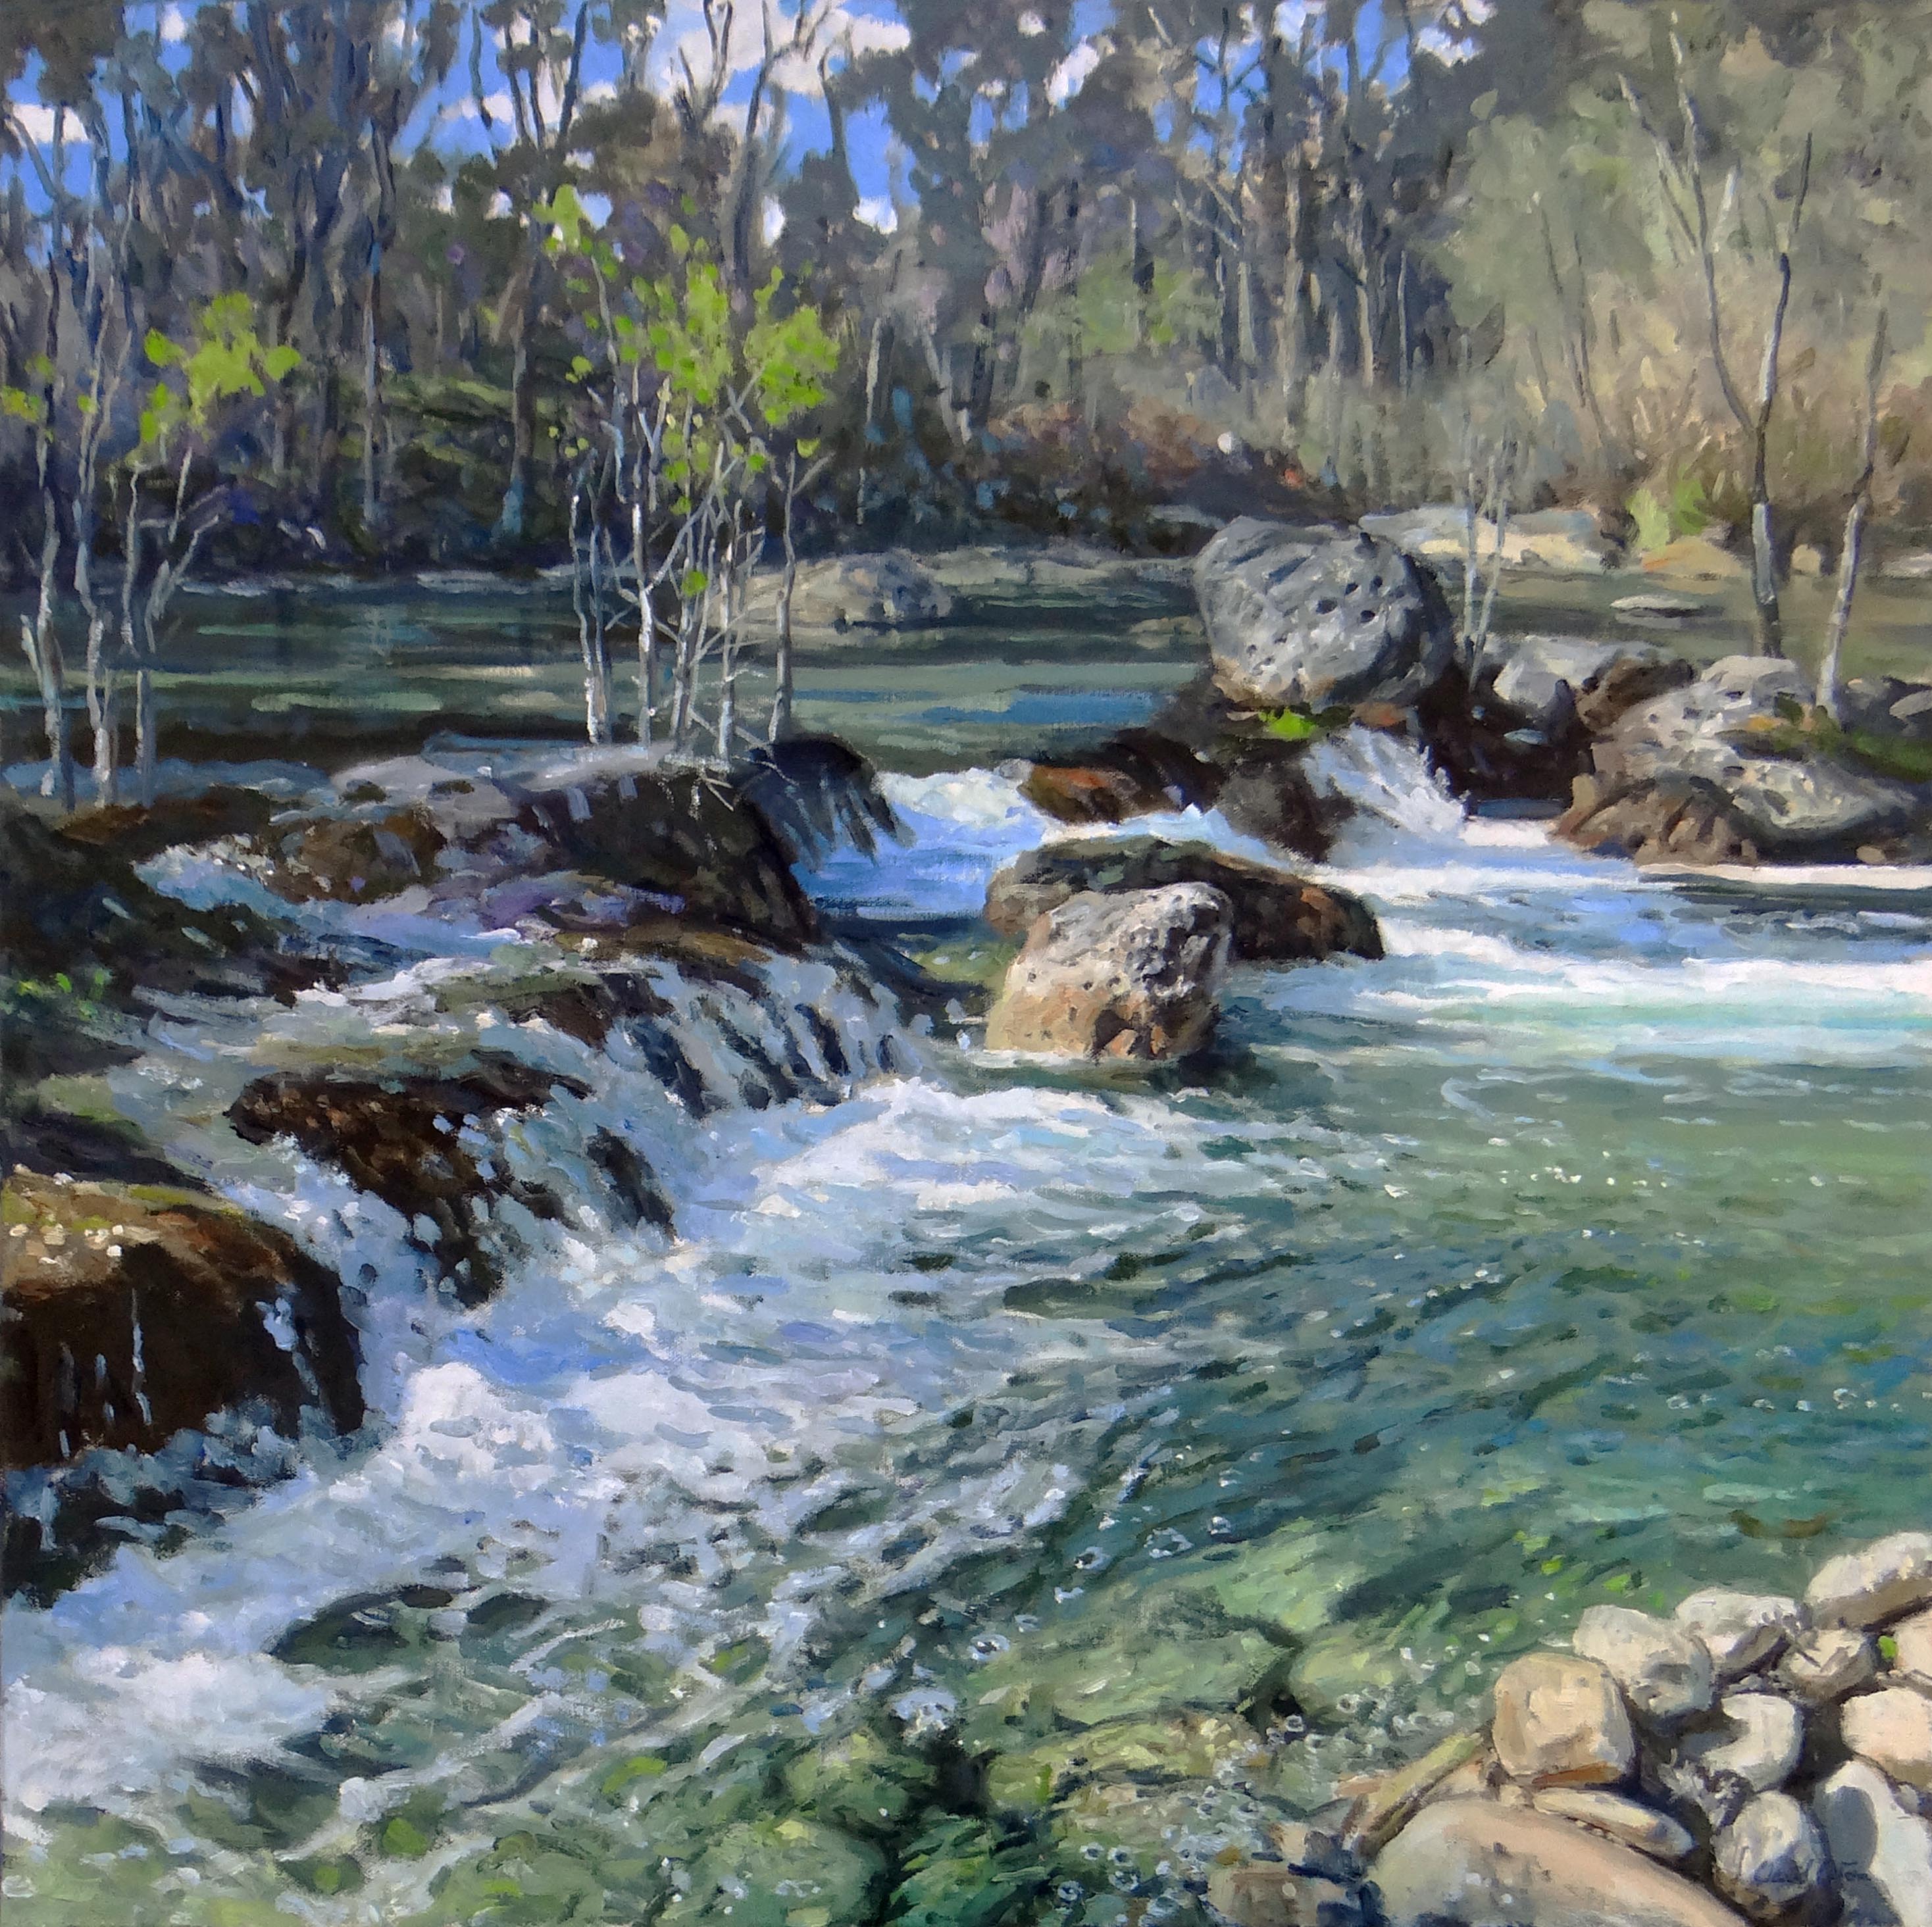 David Caton, Blinn Trail Rapids, Garner State Park, 2019, oil on canvas, 30x30 in.